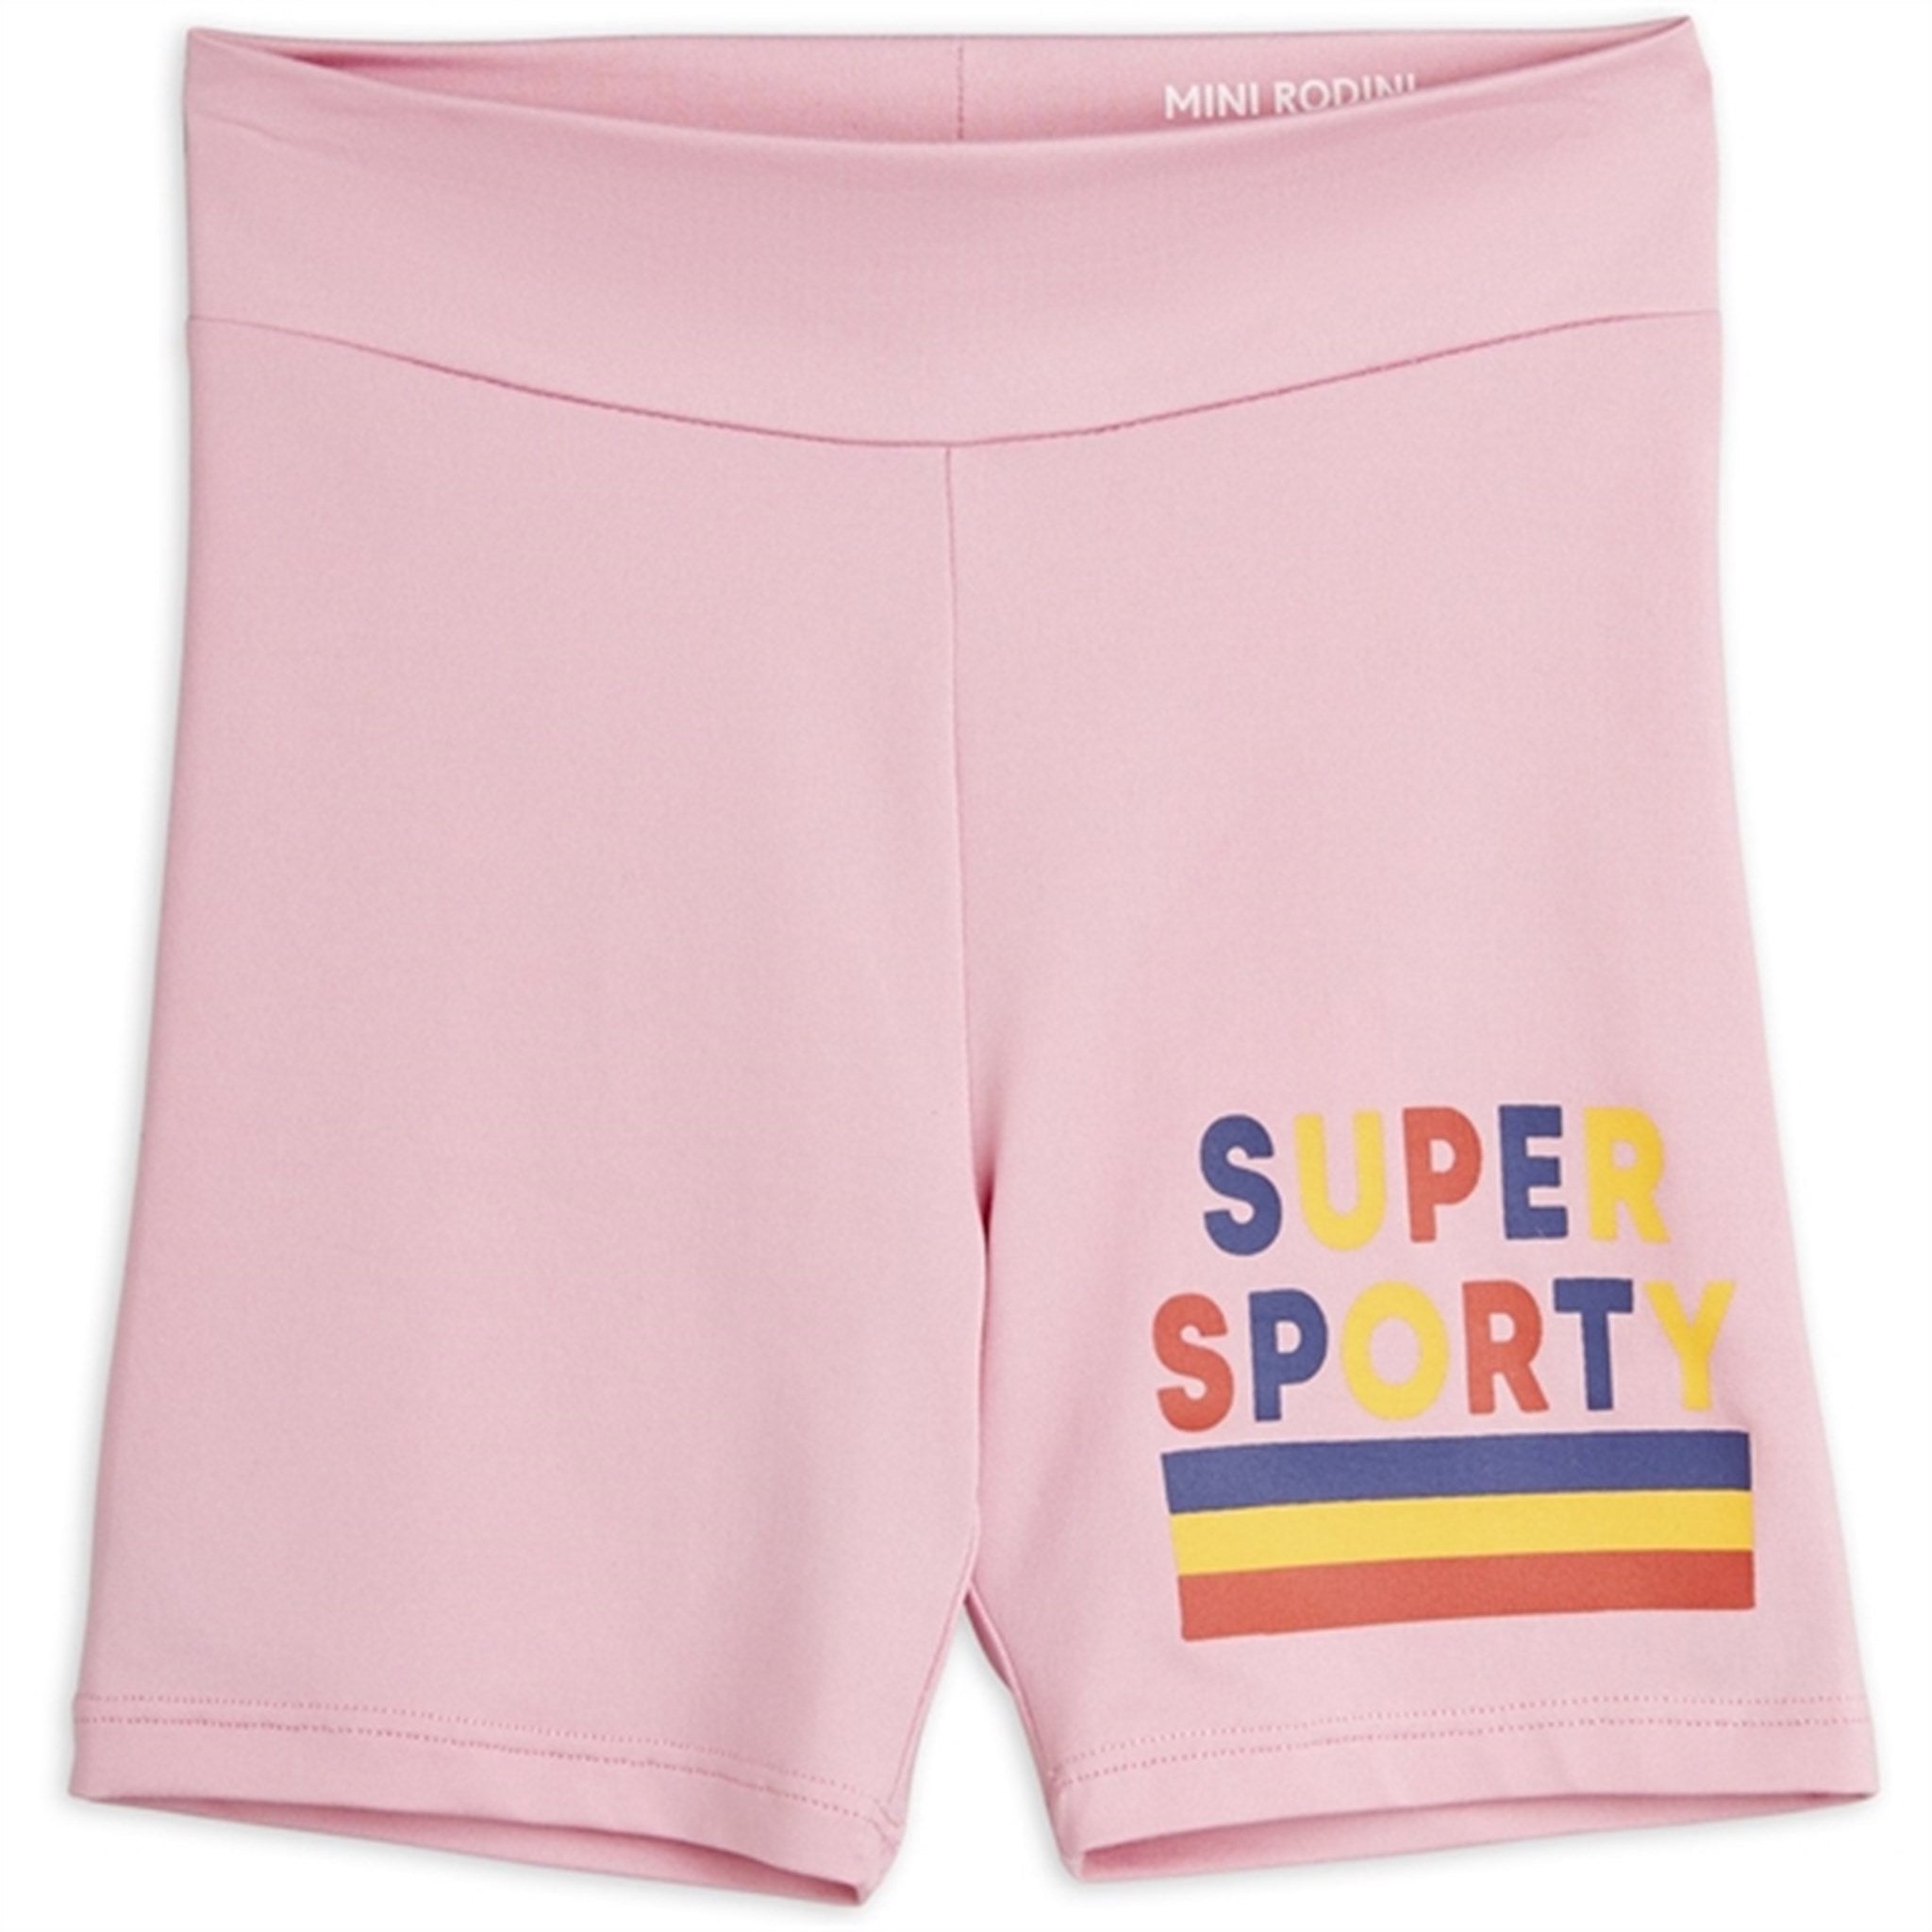 Mini Rodini Pink Super Sporty Sp Bike Shorts - Str. 92/98 cm